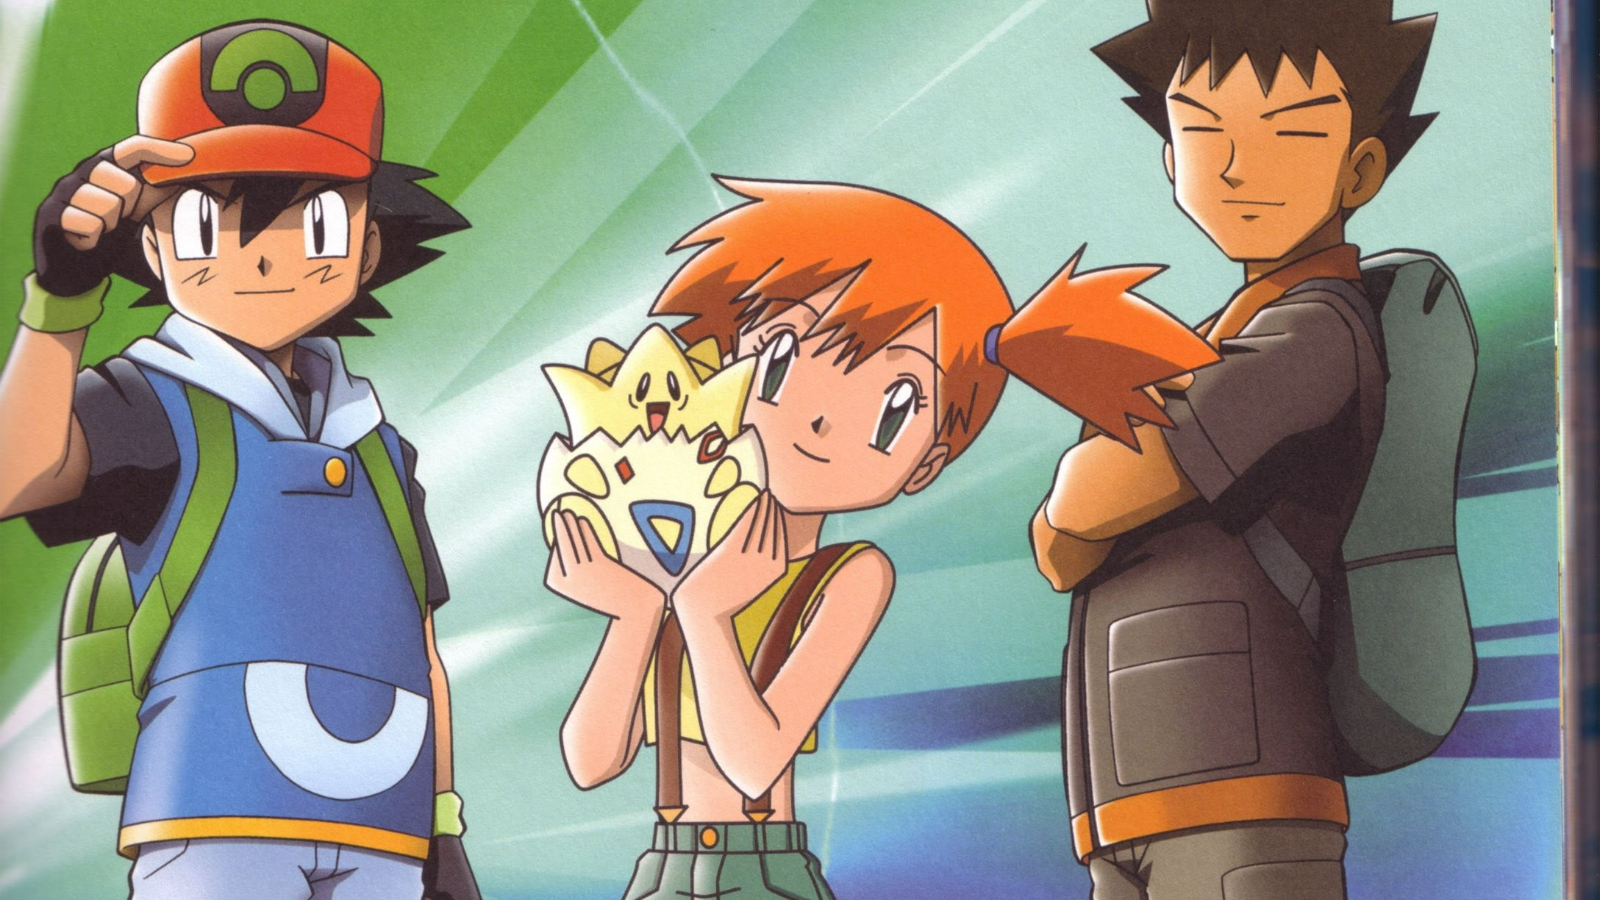 Pokemon Makes Fans Nostalgic With Original Anime Look - TechNadu